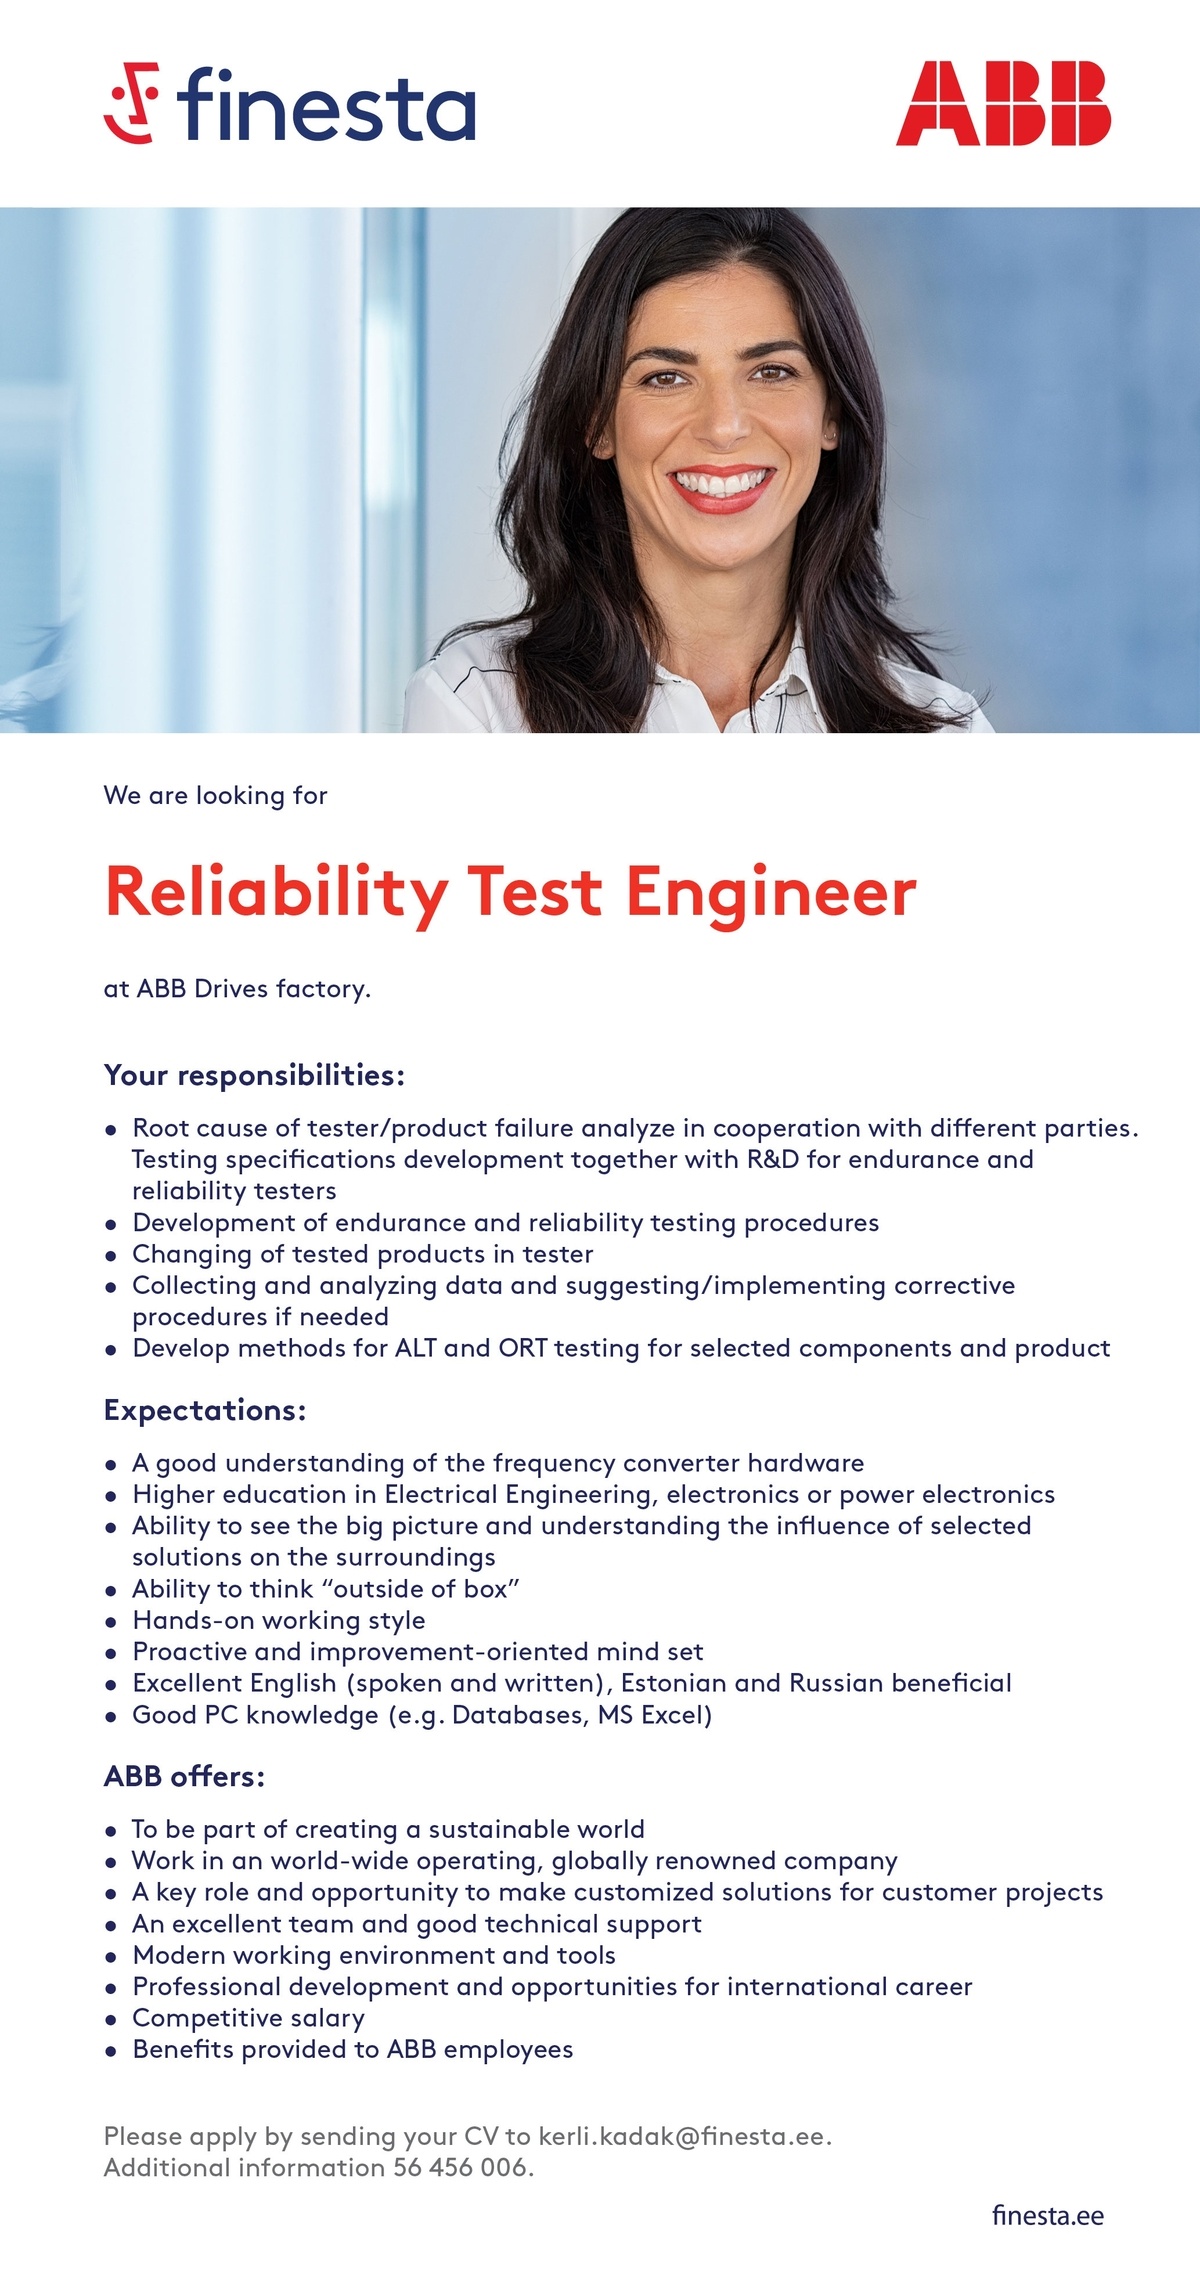 Finesta Baltic OÜ Reliability Test Engineer